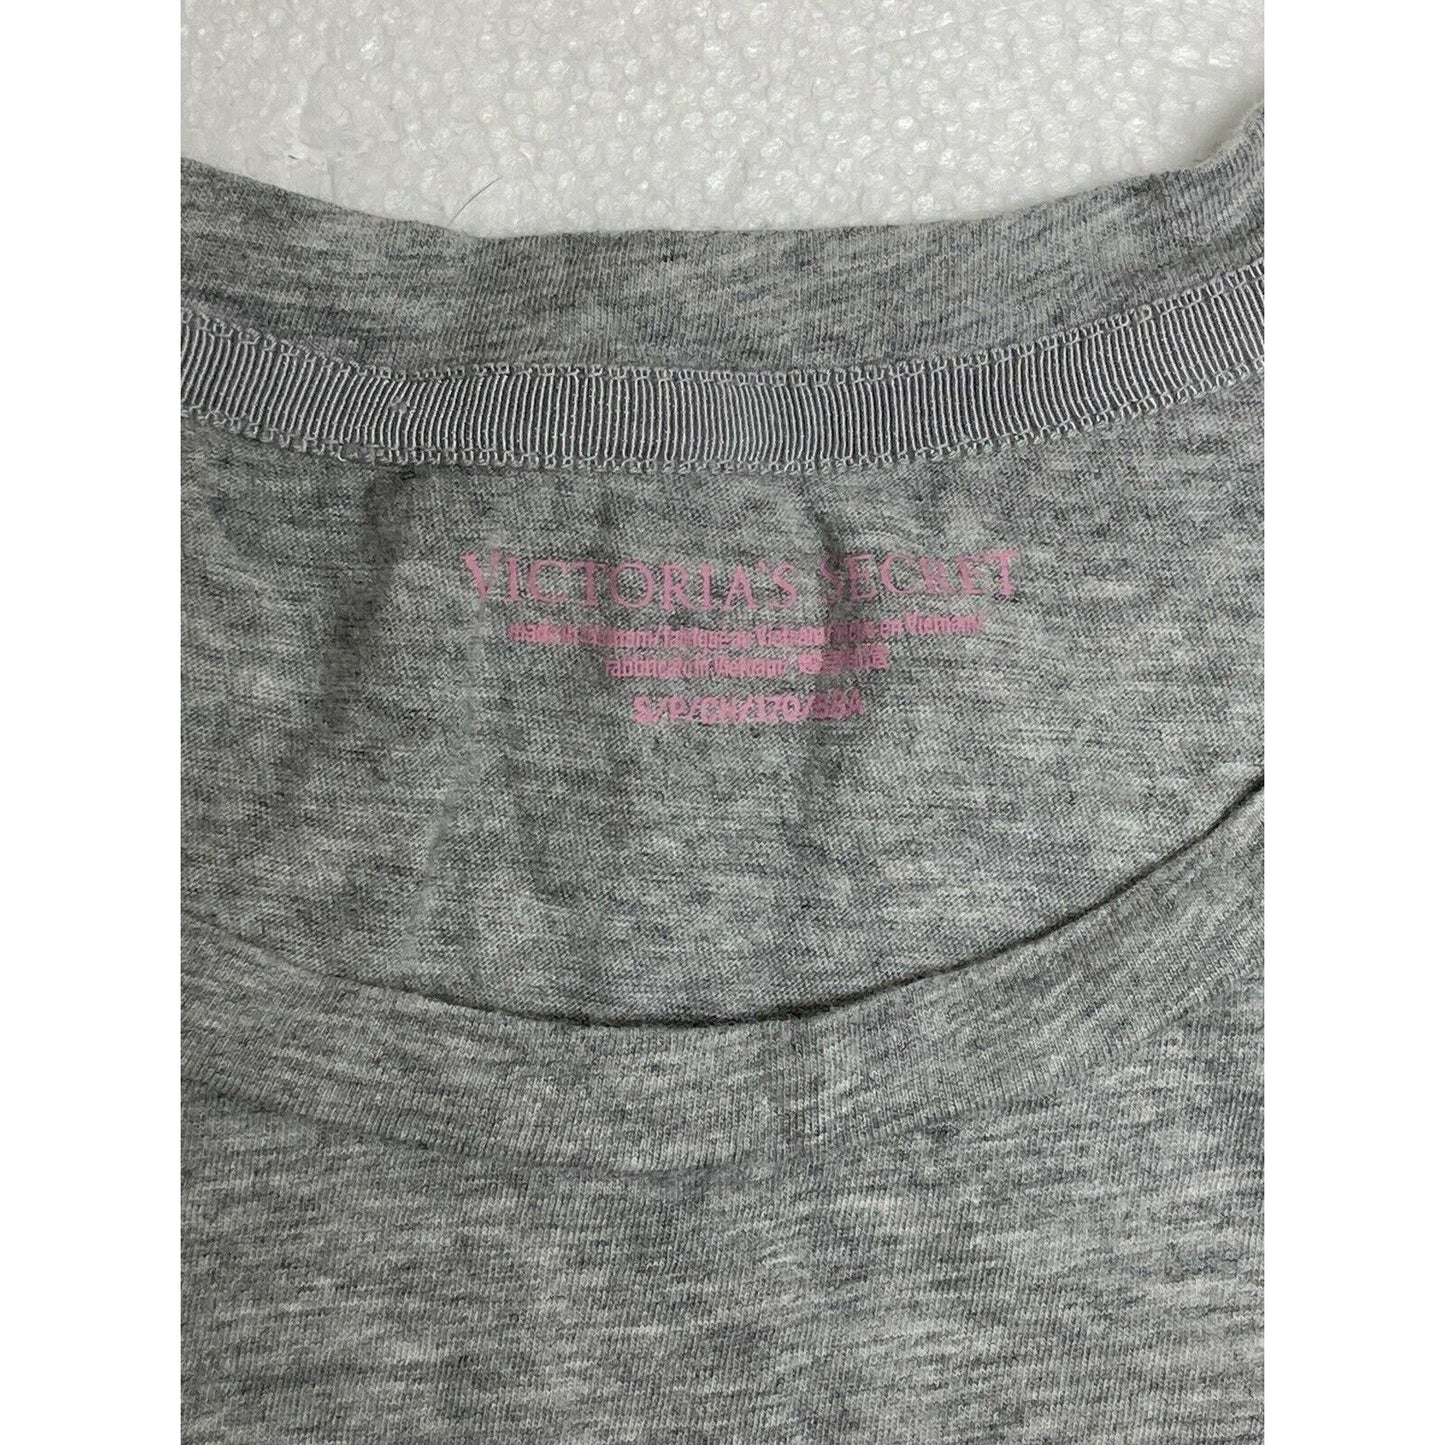 Victoria’s Secret Glitter Logo Sleep Shirt Size S Small Nightshirt Pajama